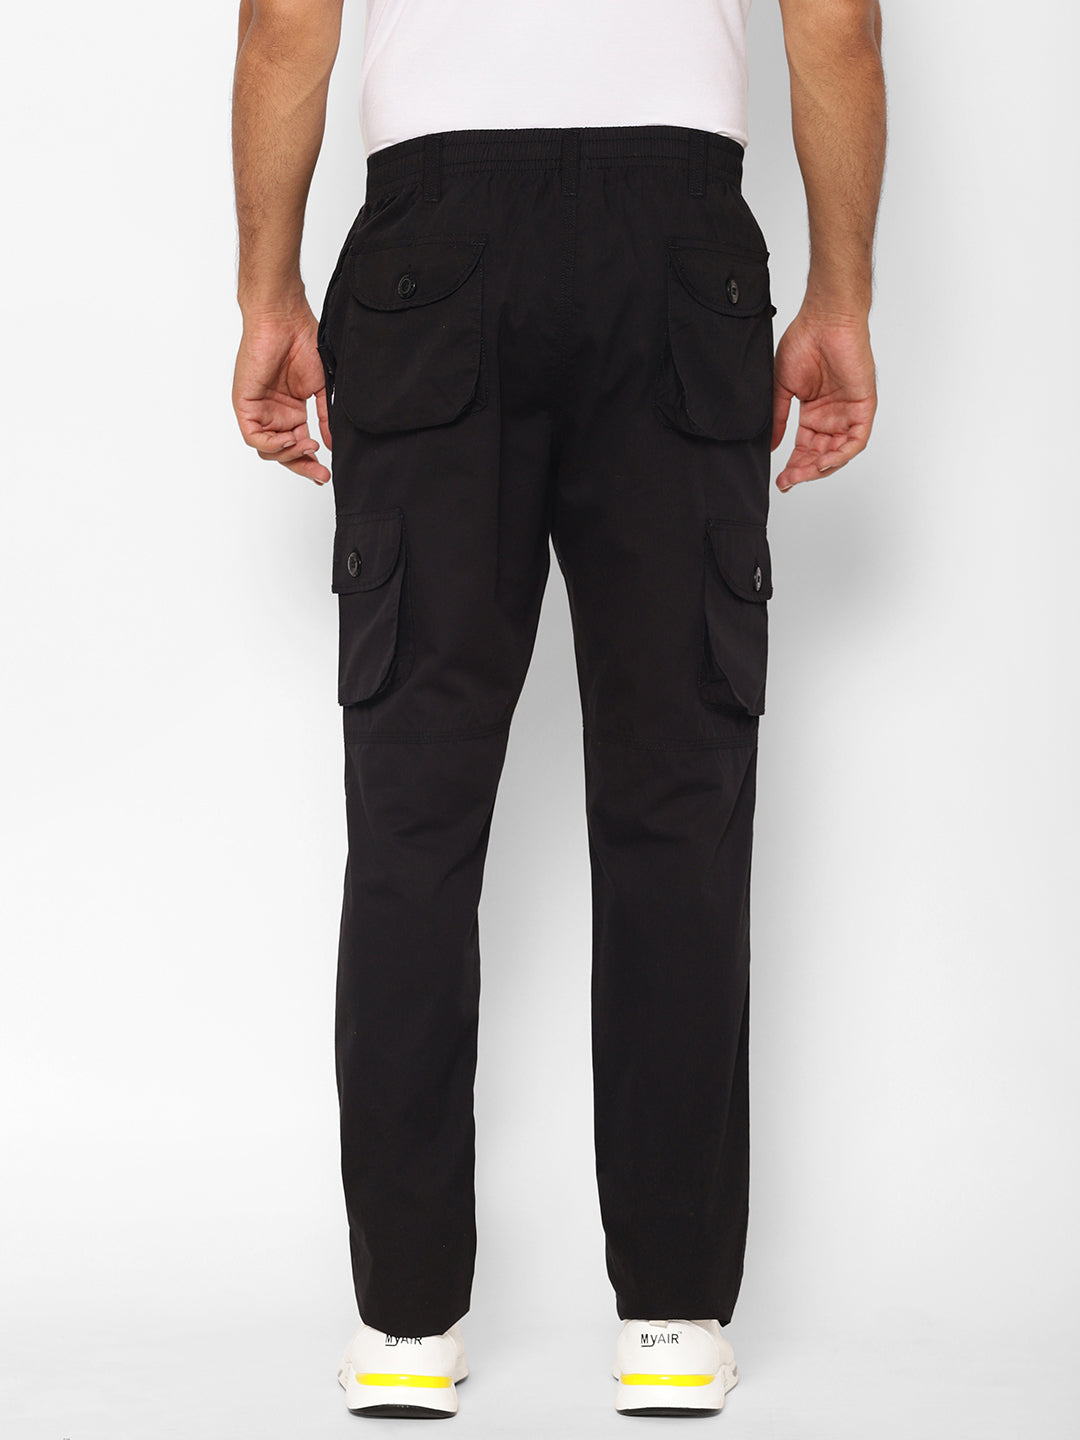 Grey's Anatomy 4277 Tall 6-Pocket Pant – The Uniform Shoppe